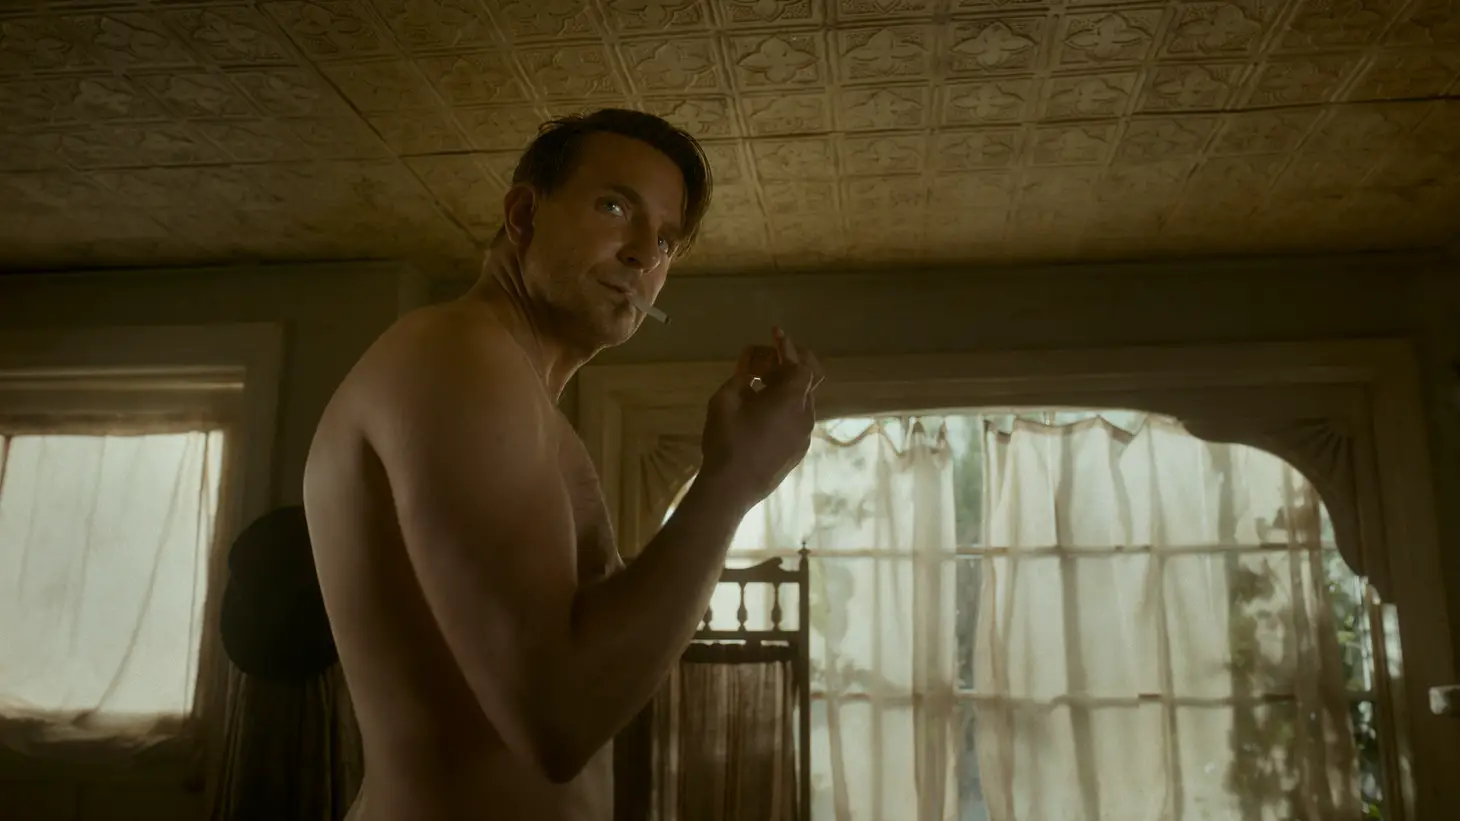 Primer desnudo integral de Bradley Cooper